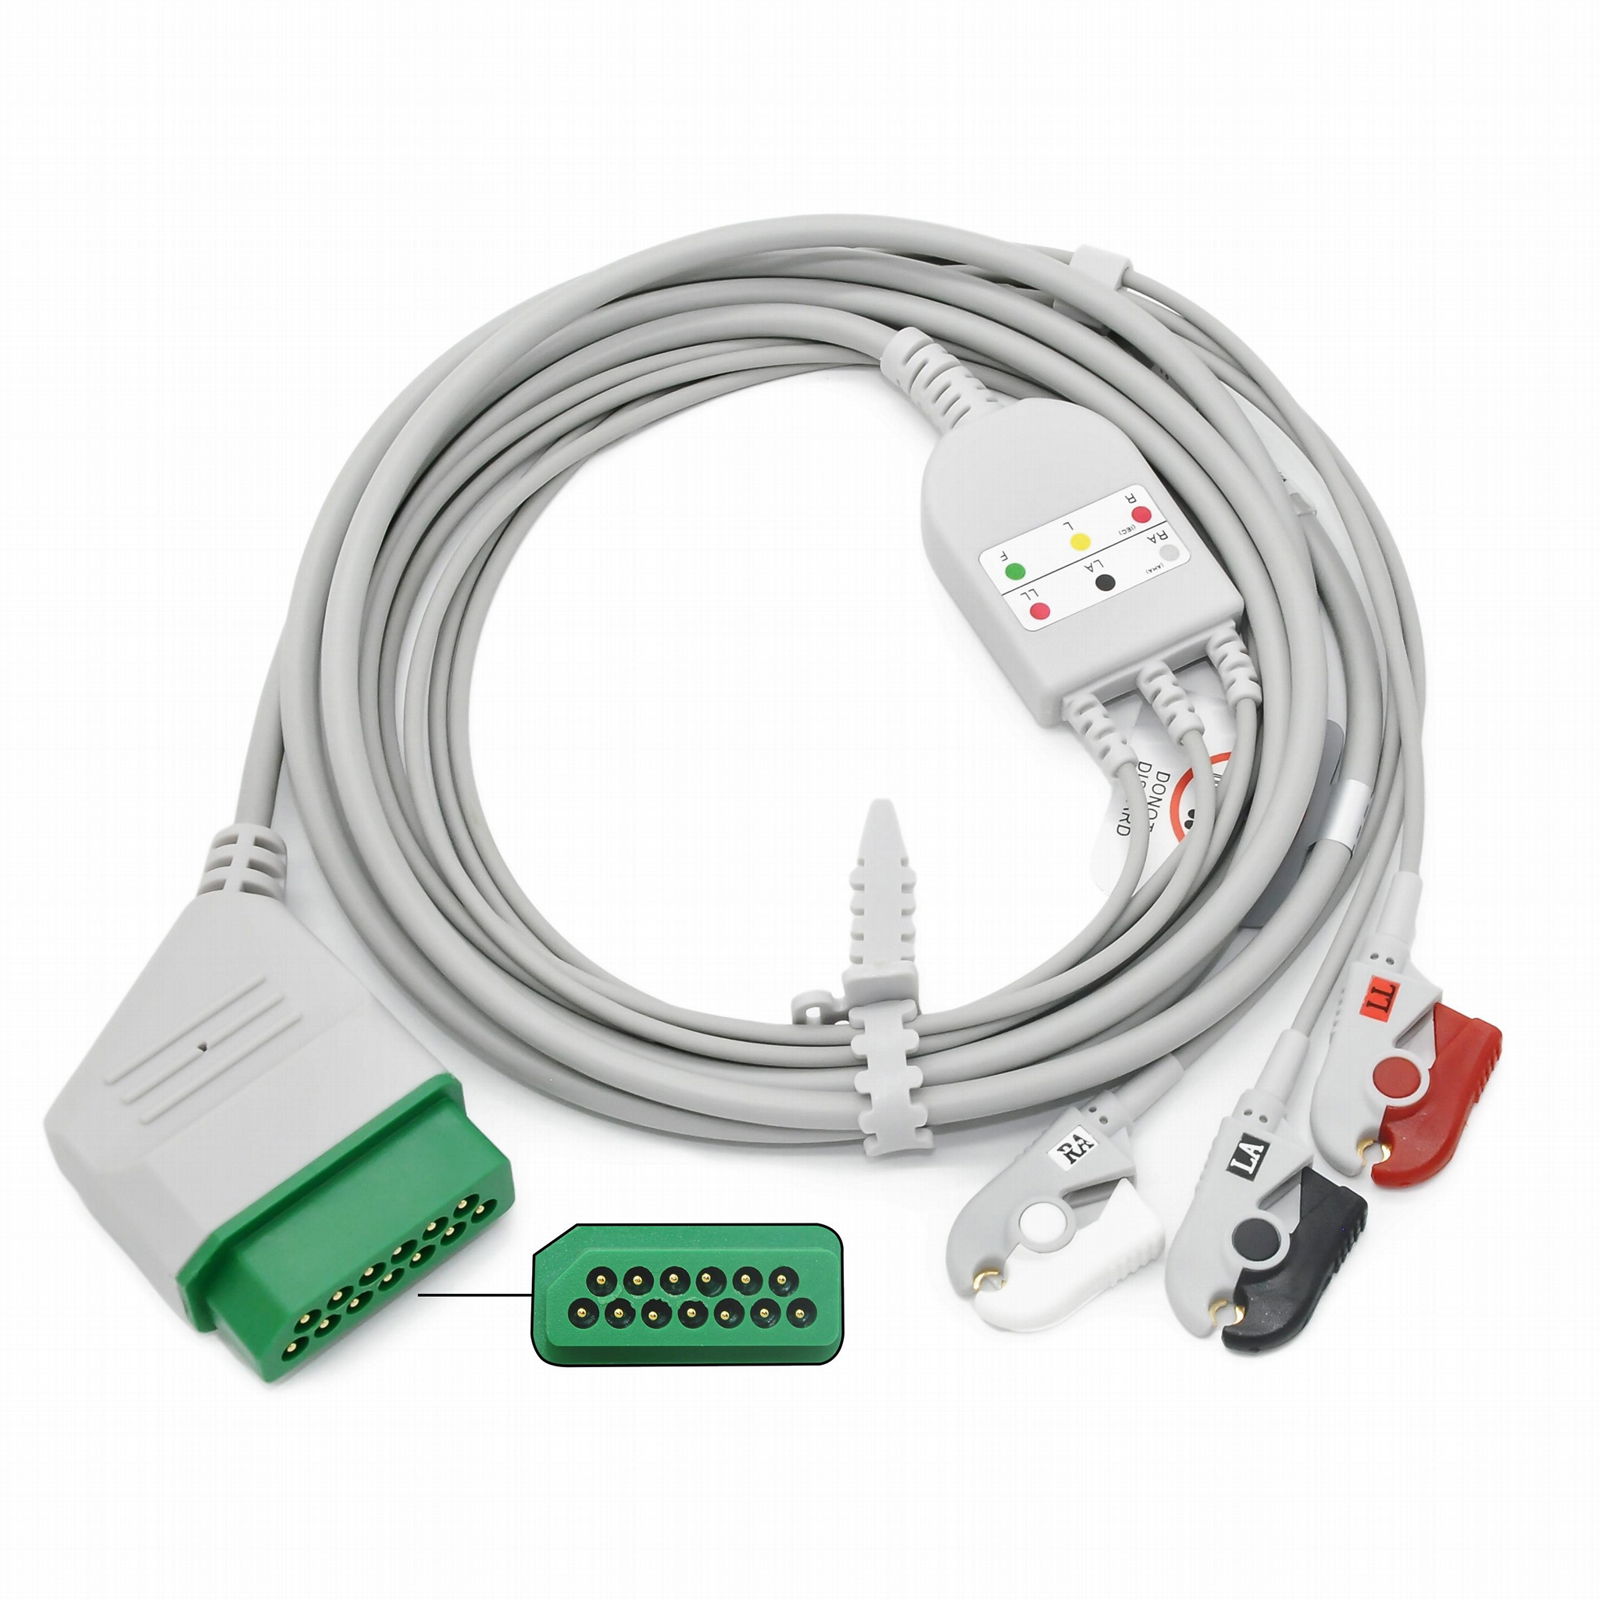 Nihon Kohden ECG Cable with leadwires 